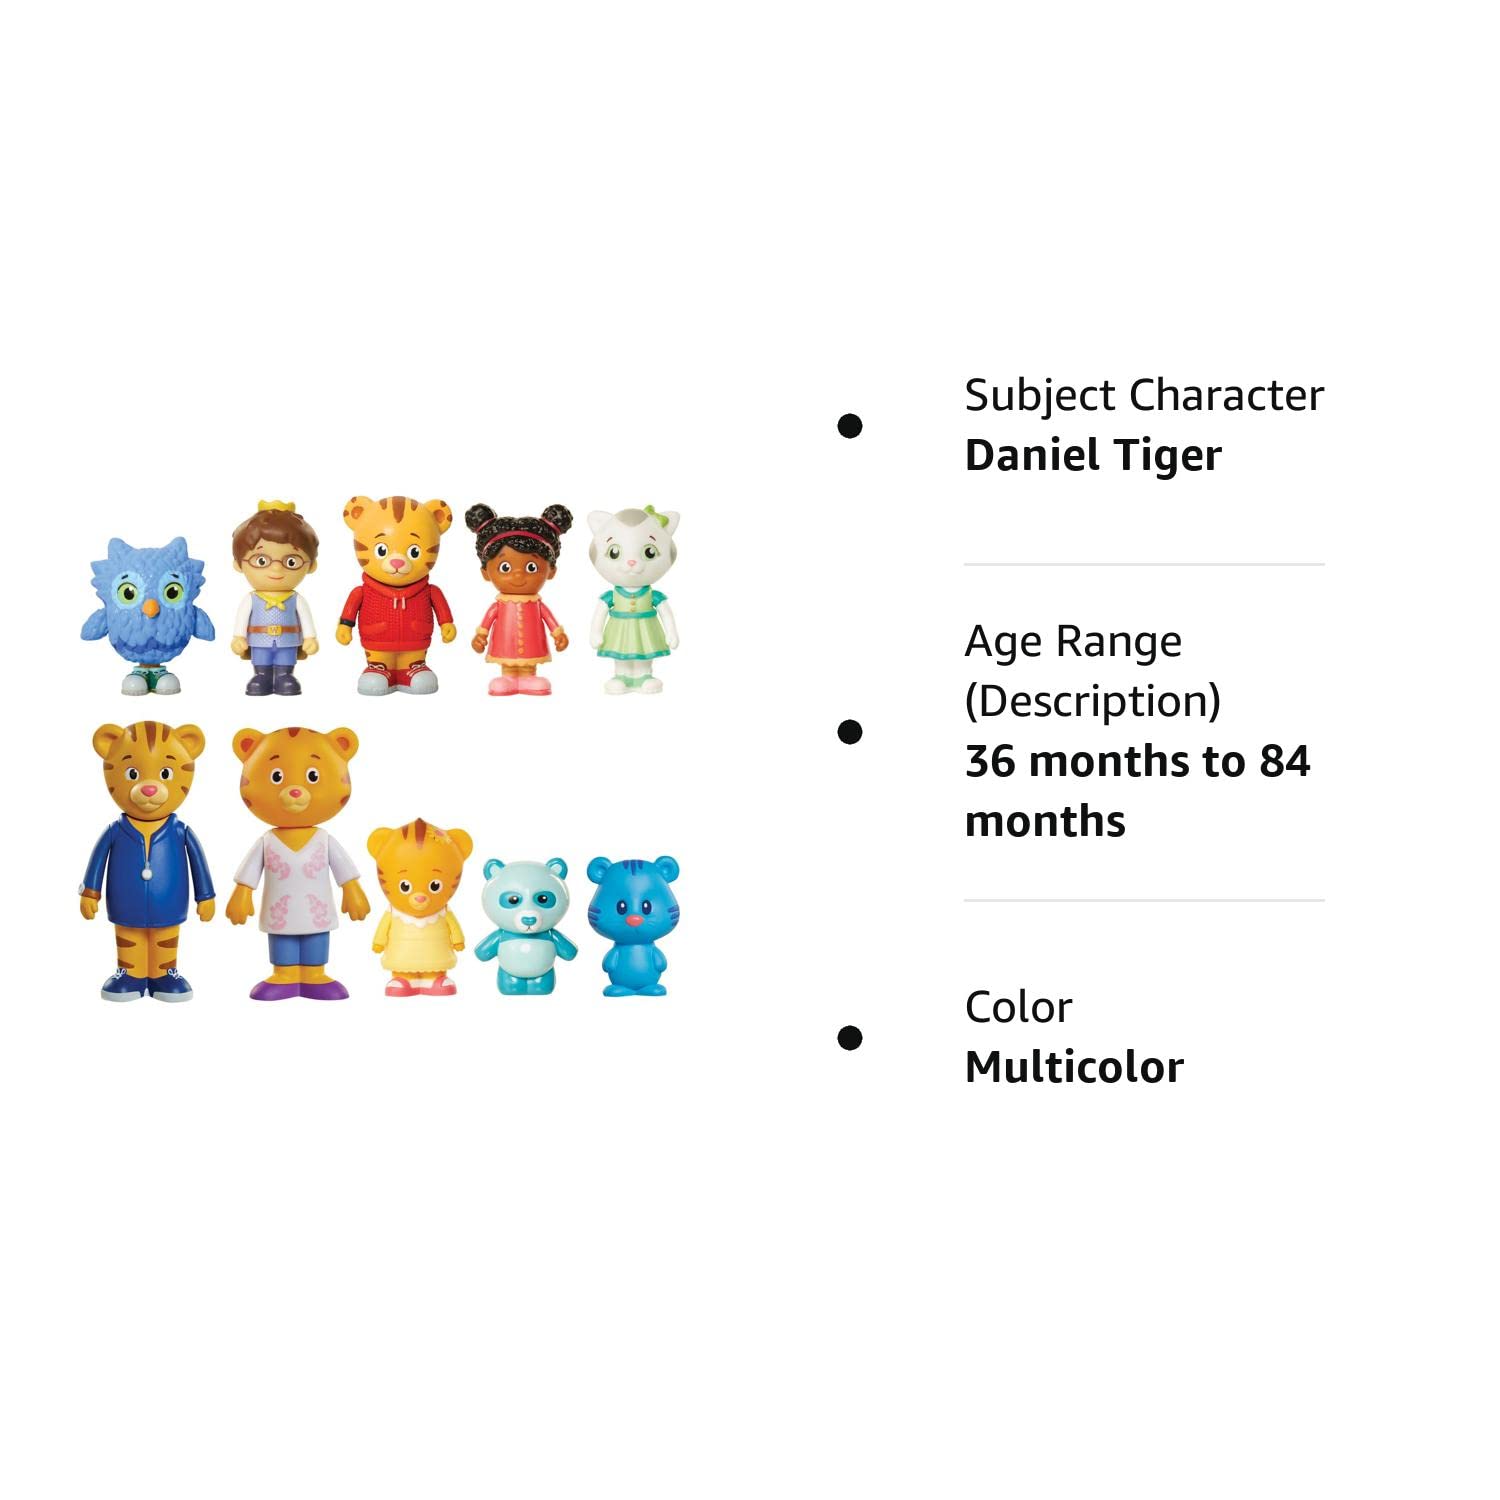 Daniel Tiger's Neighborhood Friends & Family Figure Set (10 Pack) Includes: Daniel, Friends, Dad & Mom Tiger, Tigey & Exclusive Figure Pandy